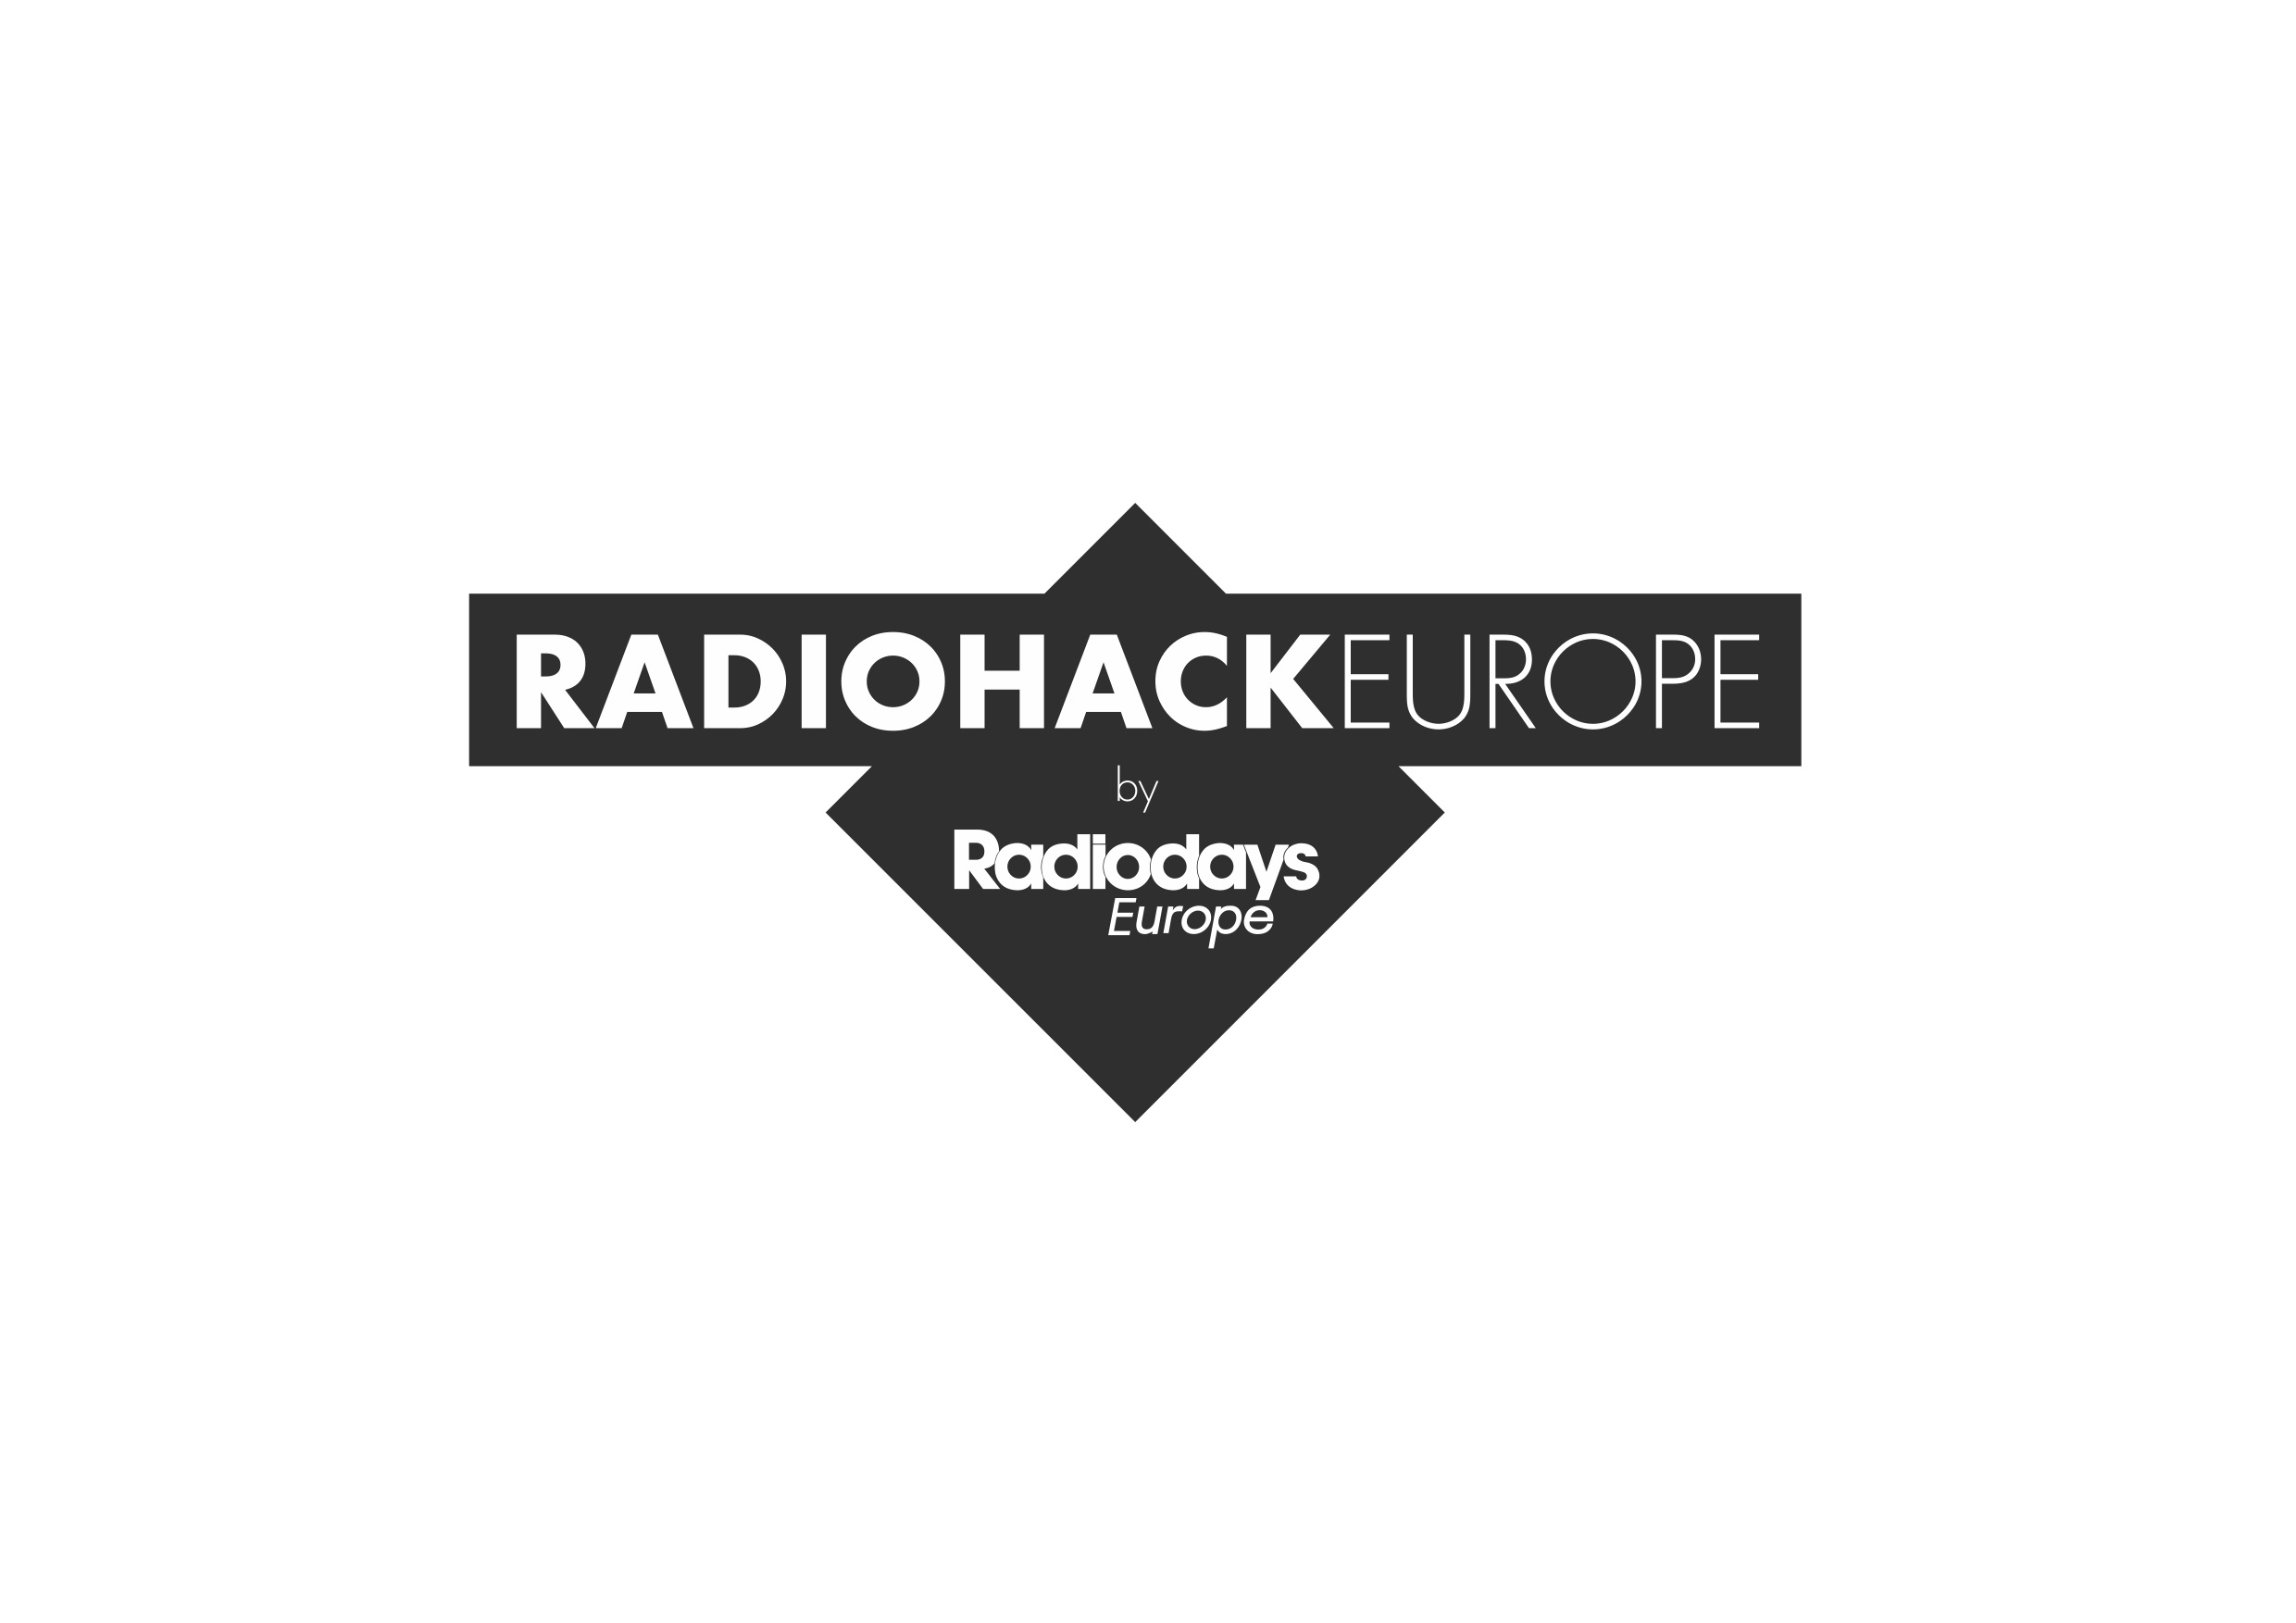 raddiohack europe logo black